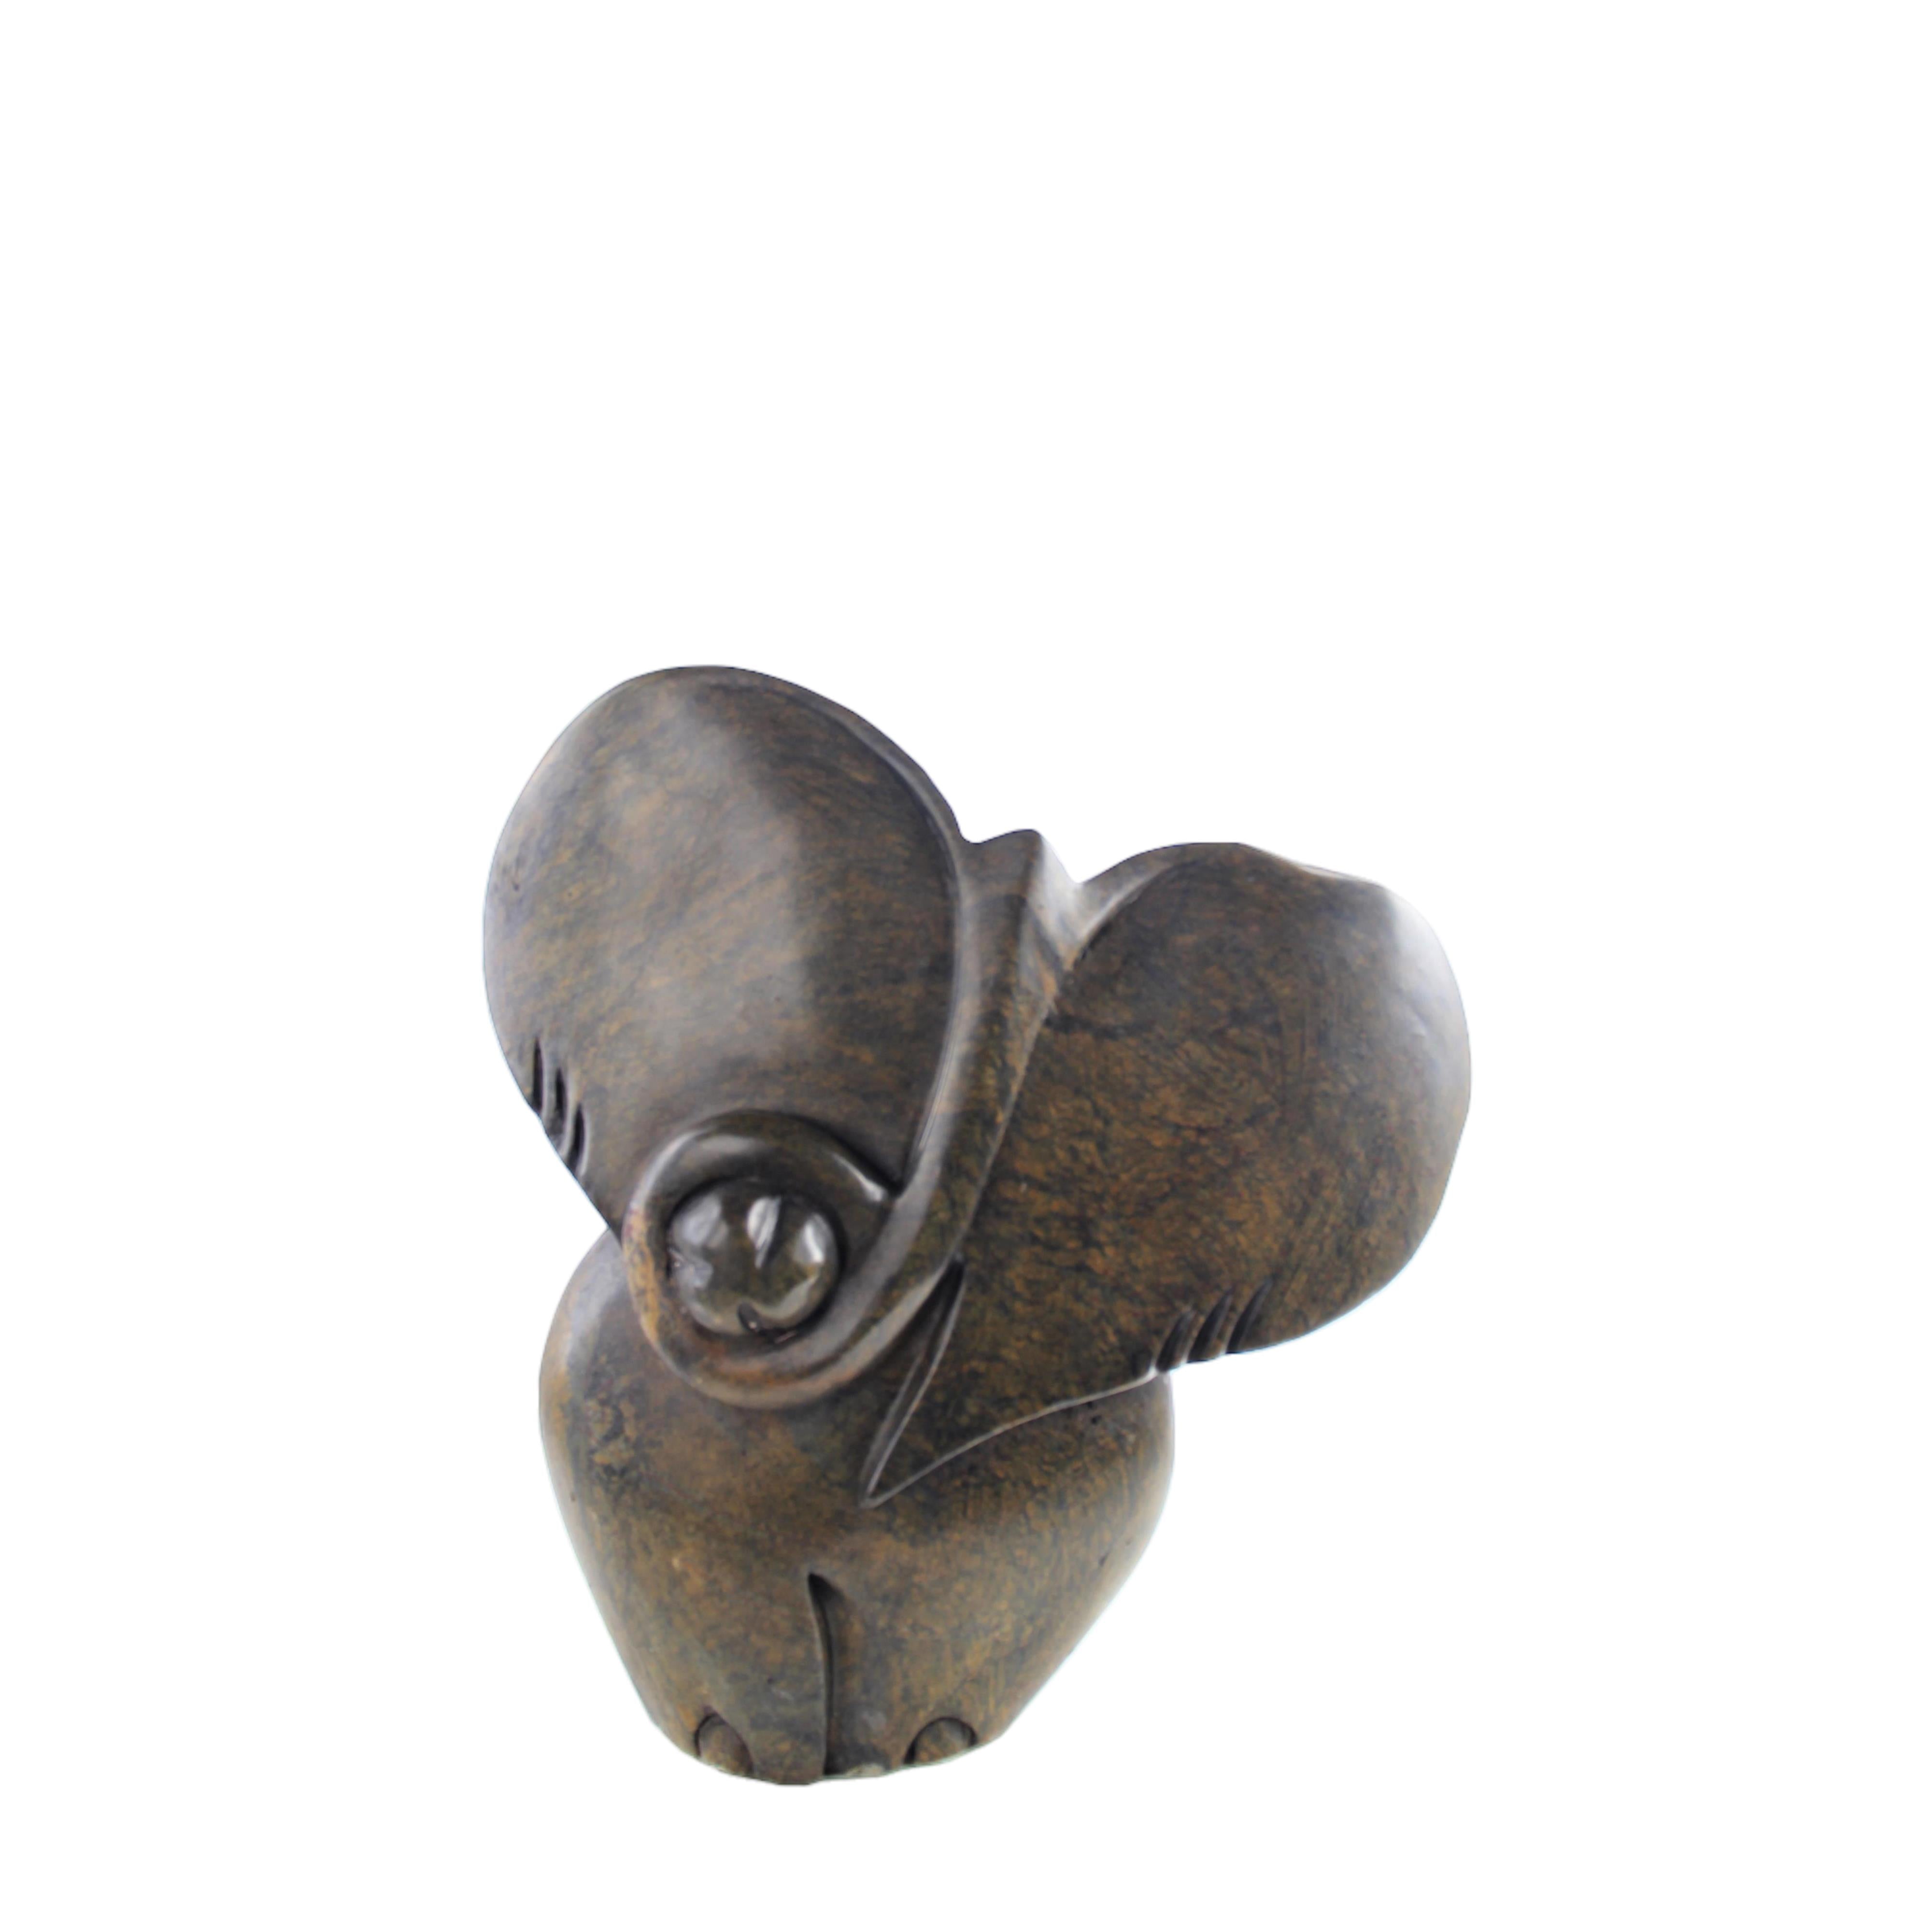 Shona Tribe Serpentine Stone Elephant ~15.0" Tall - Elephant